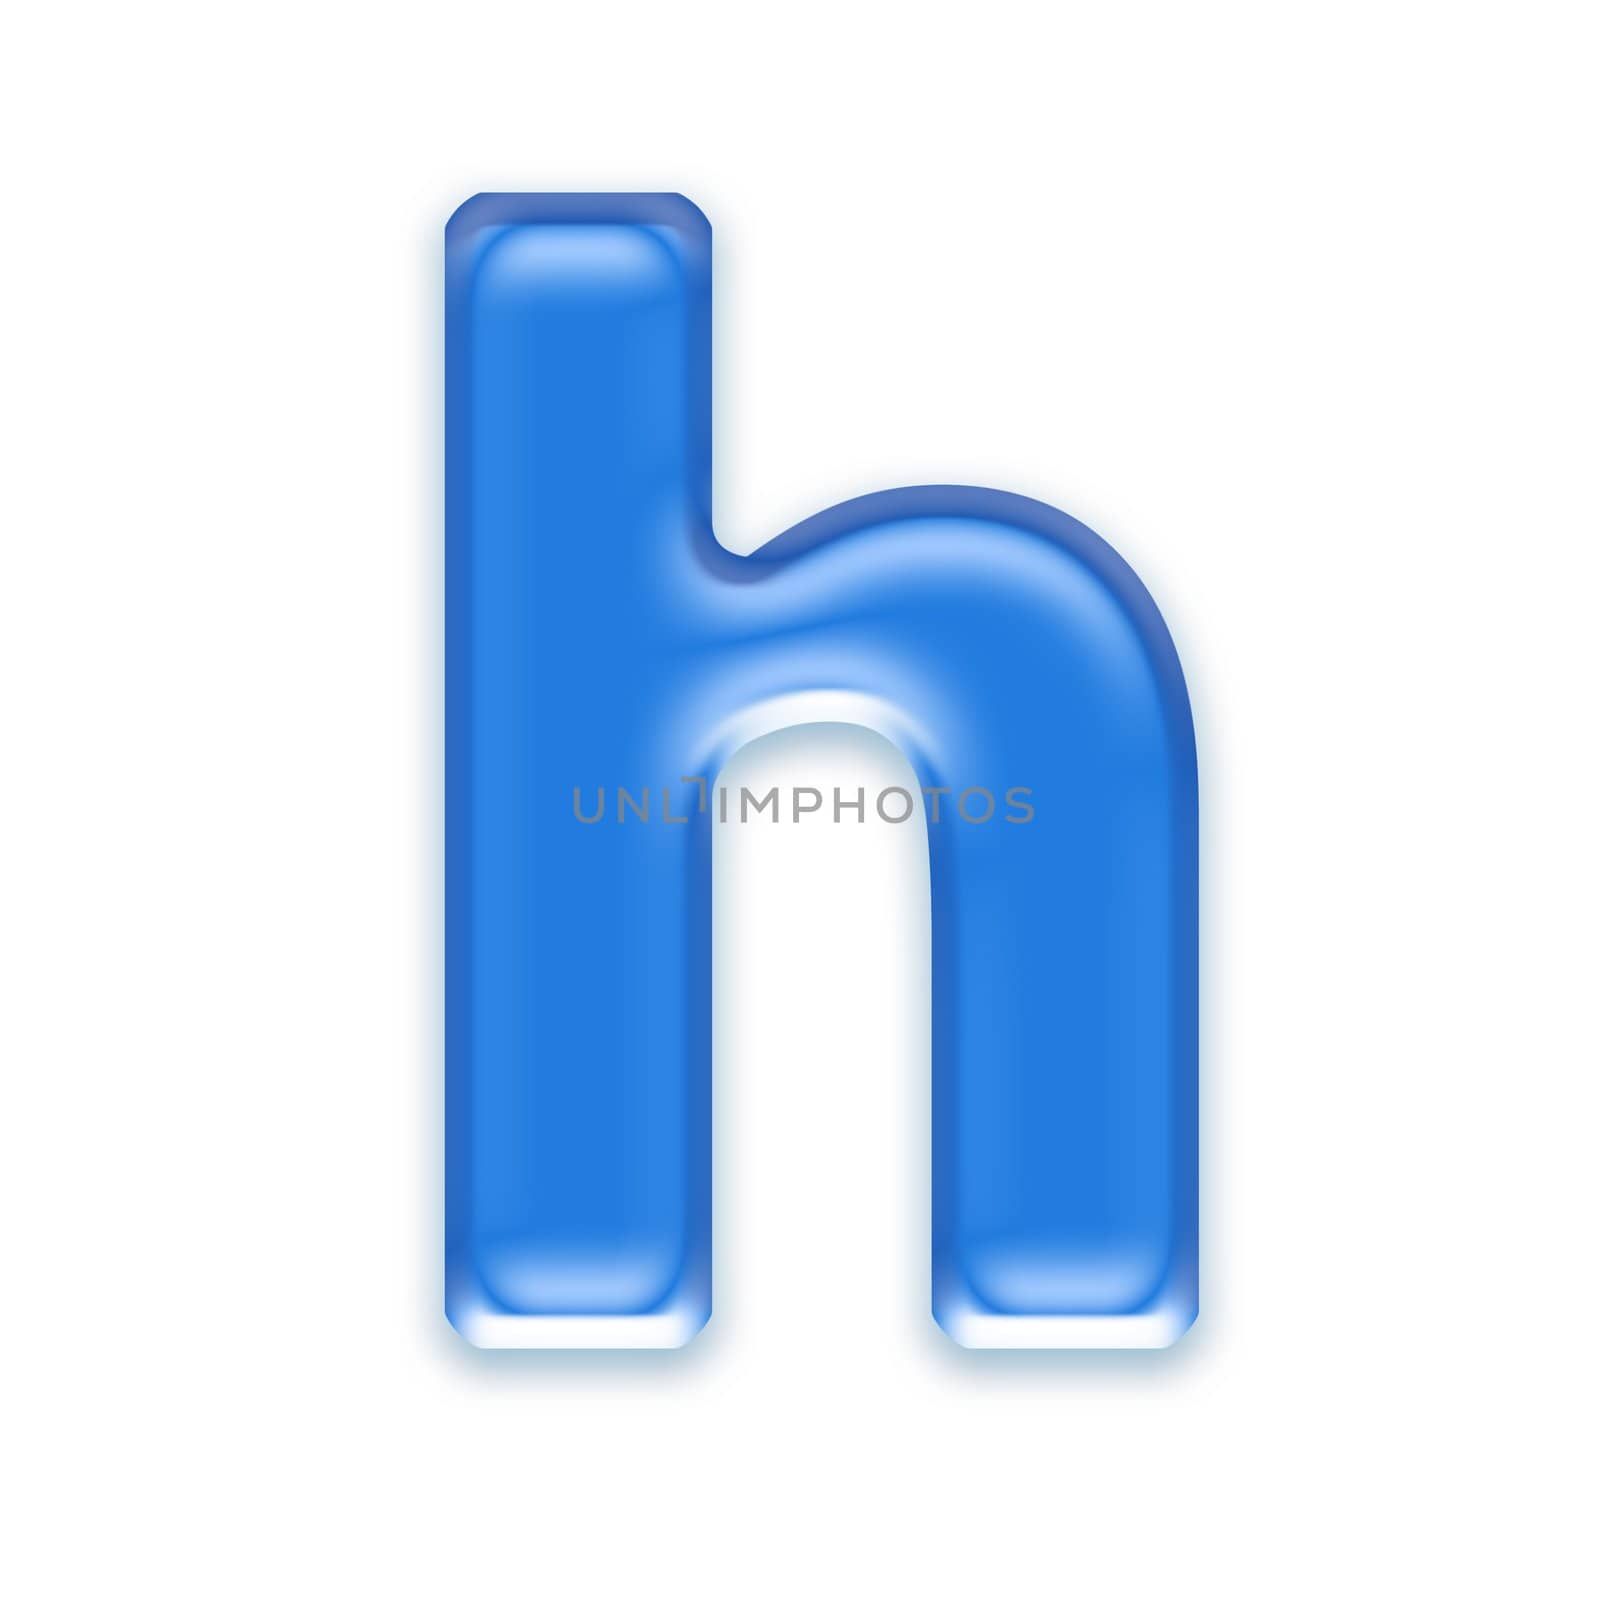 Aqua letter isolated on white background  - h